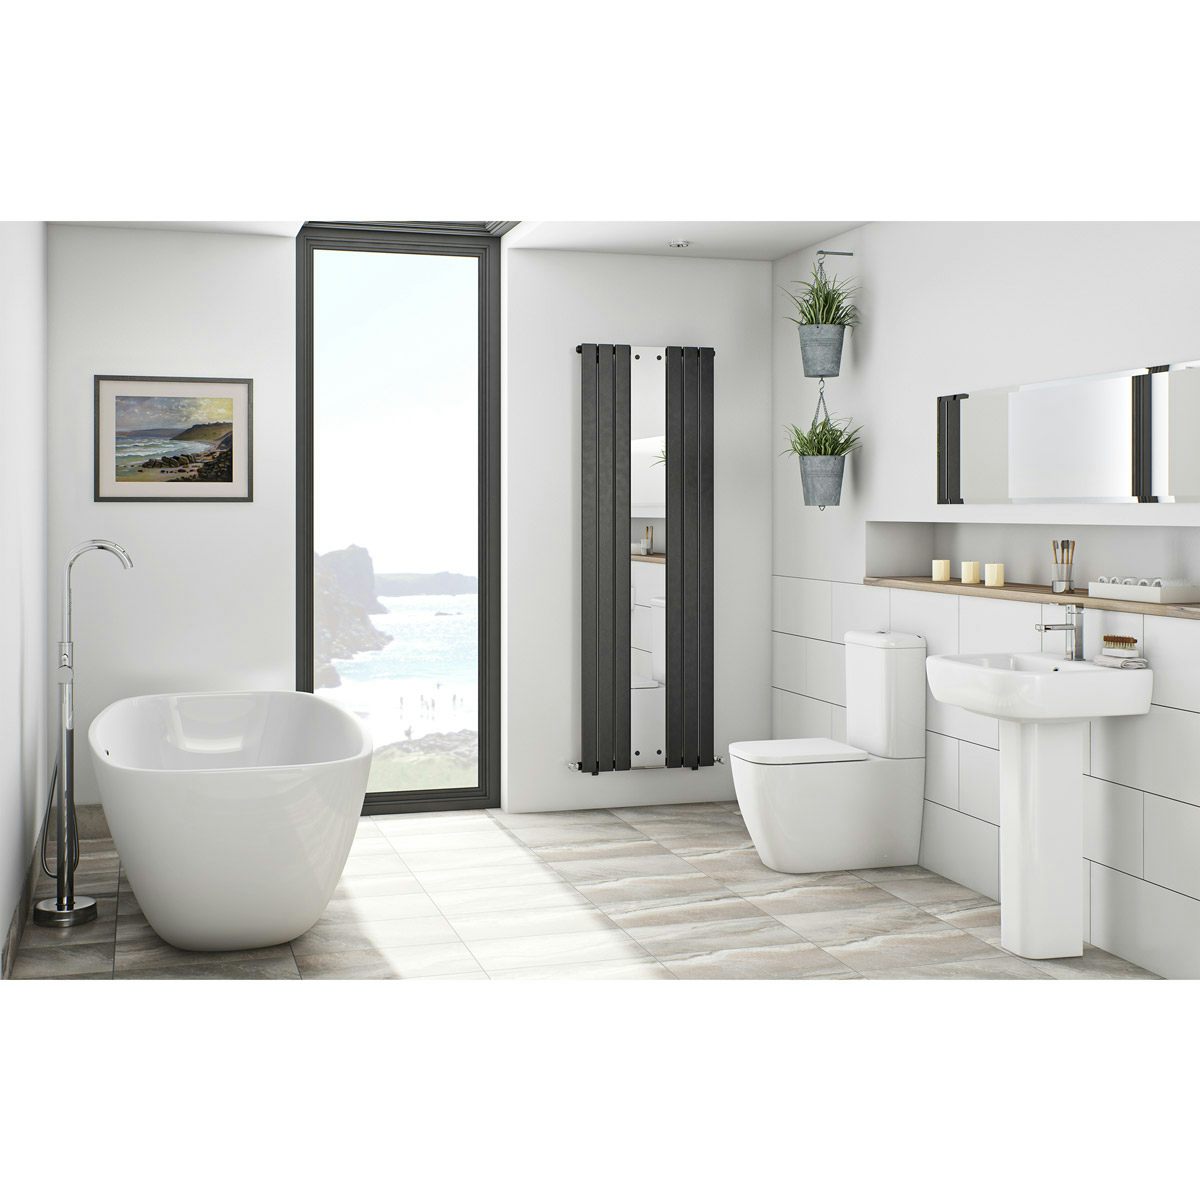 Mode Ellis bathroom  suite  with freestanding bath 